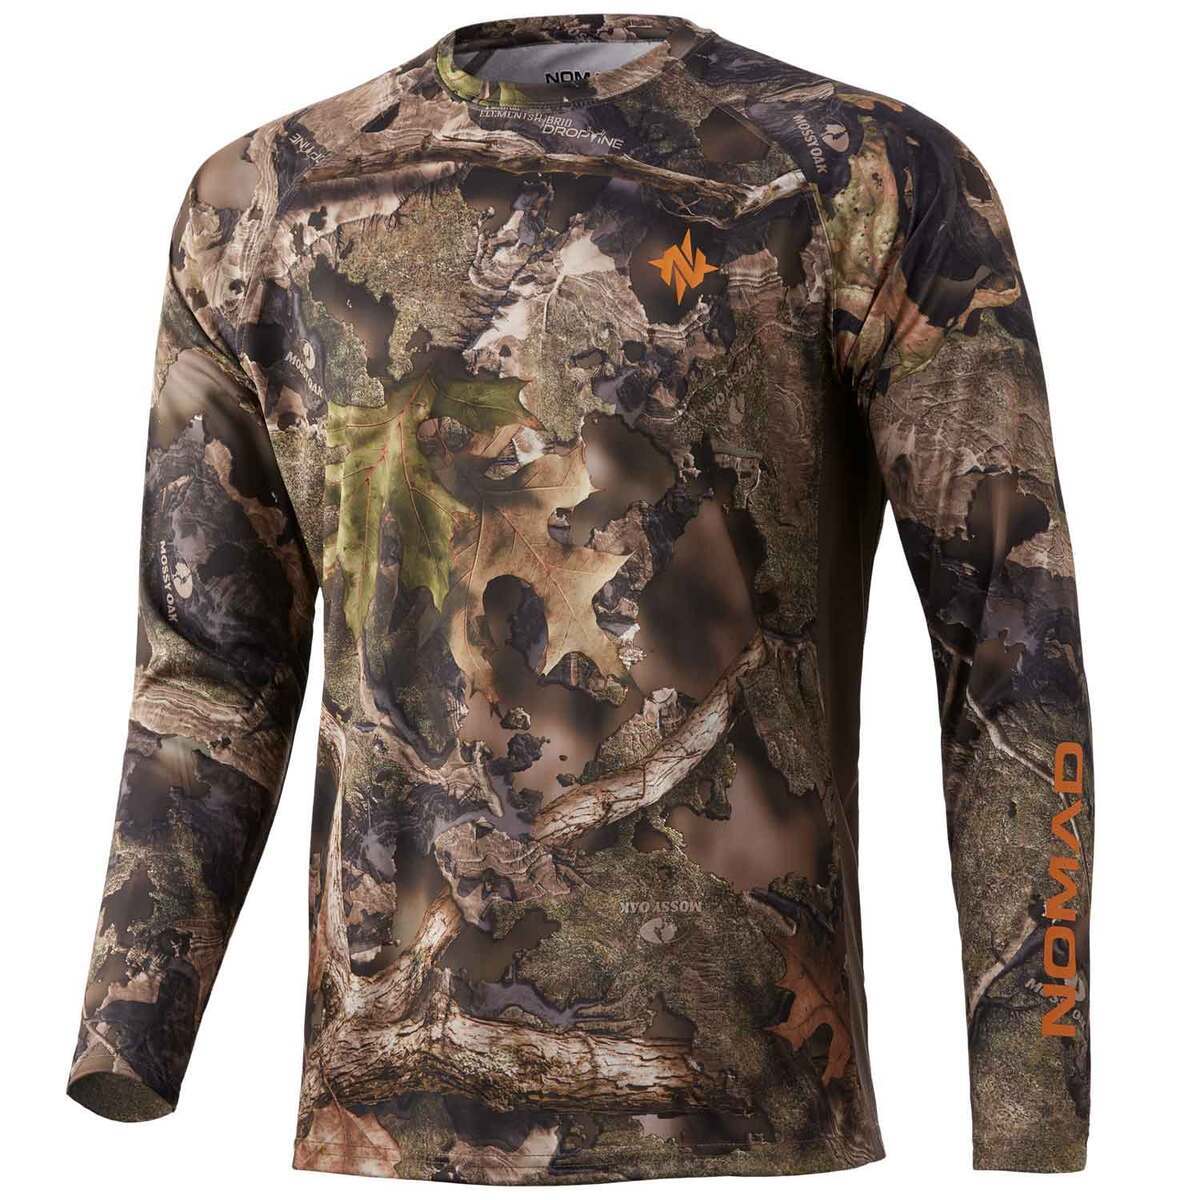 Nomad Men's Pursuit Camo Long-Sleeve Hunting Shirt, Medium, Mossy Oak Droptine